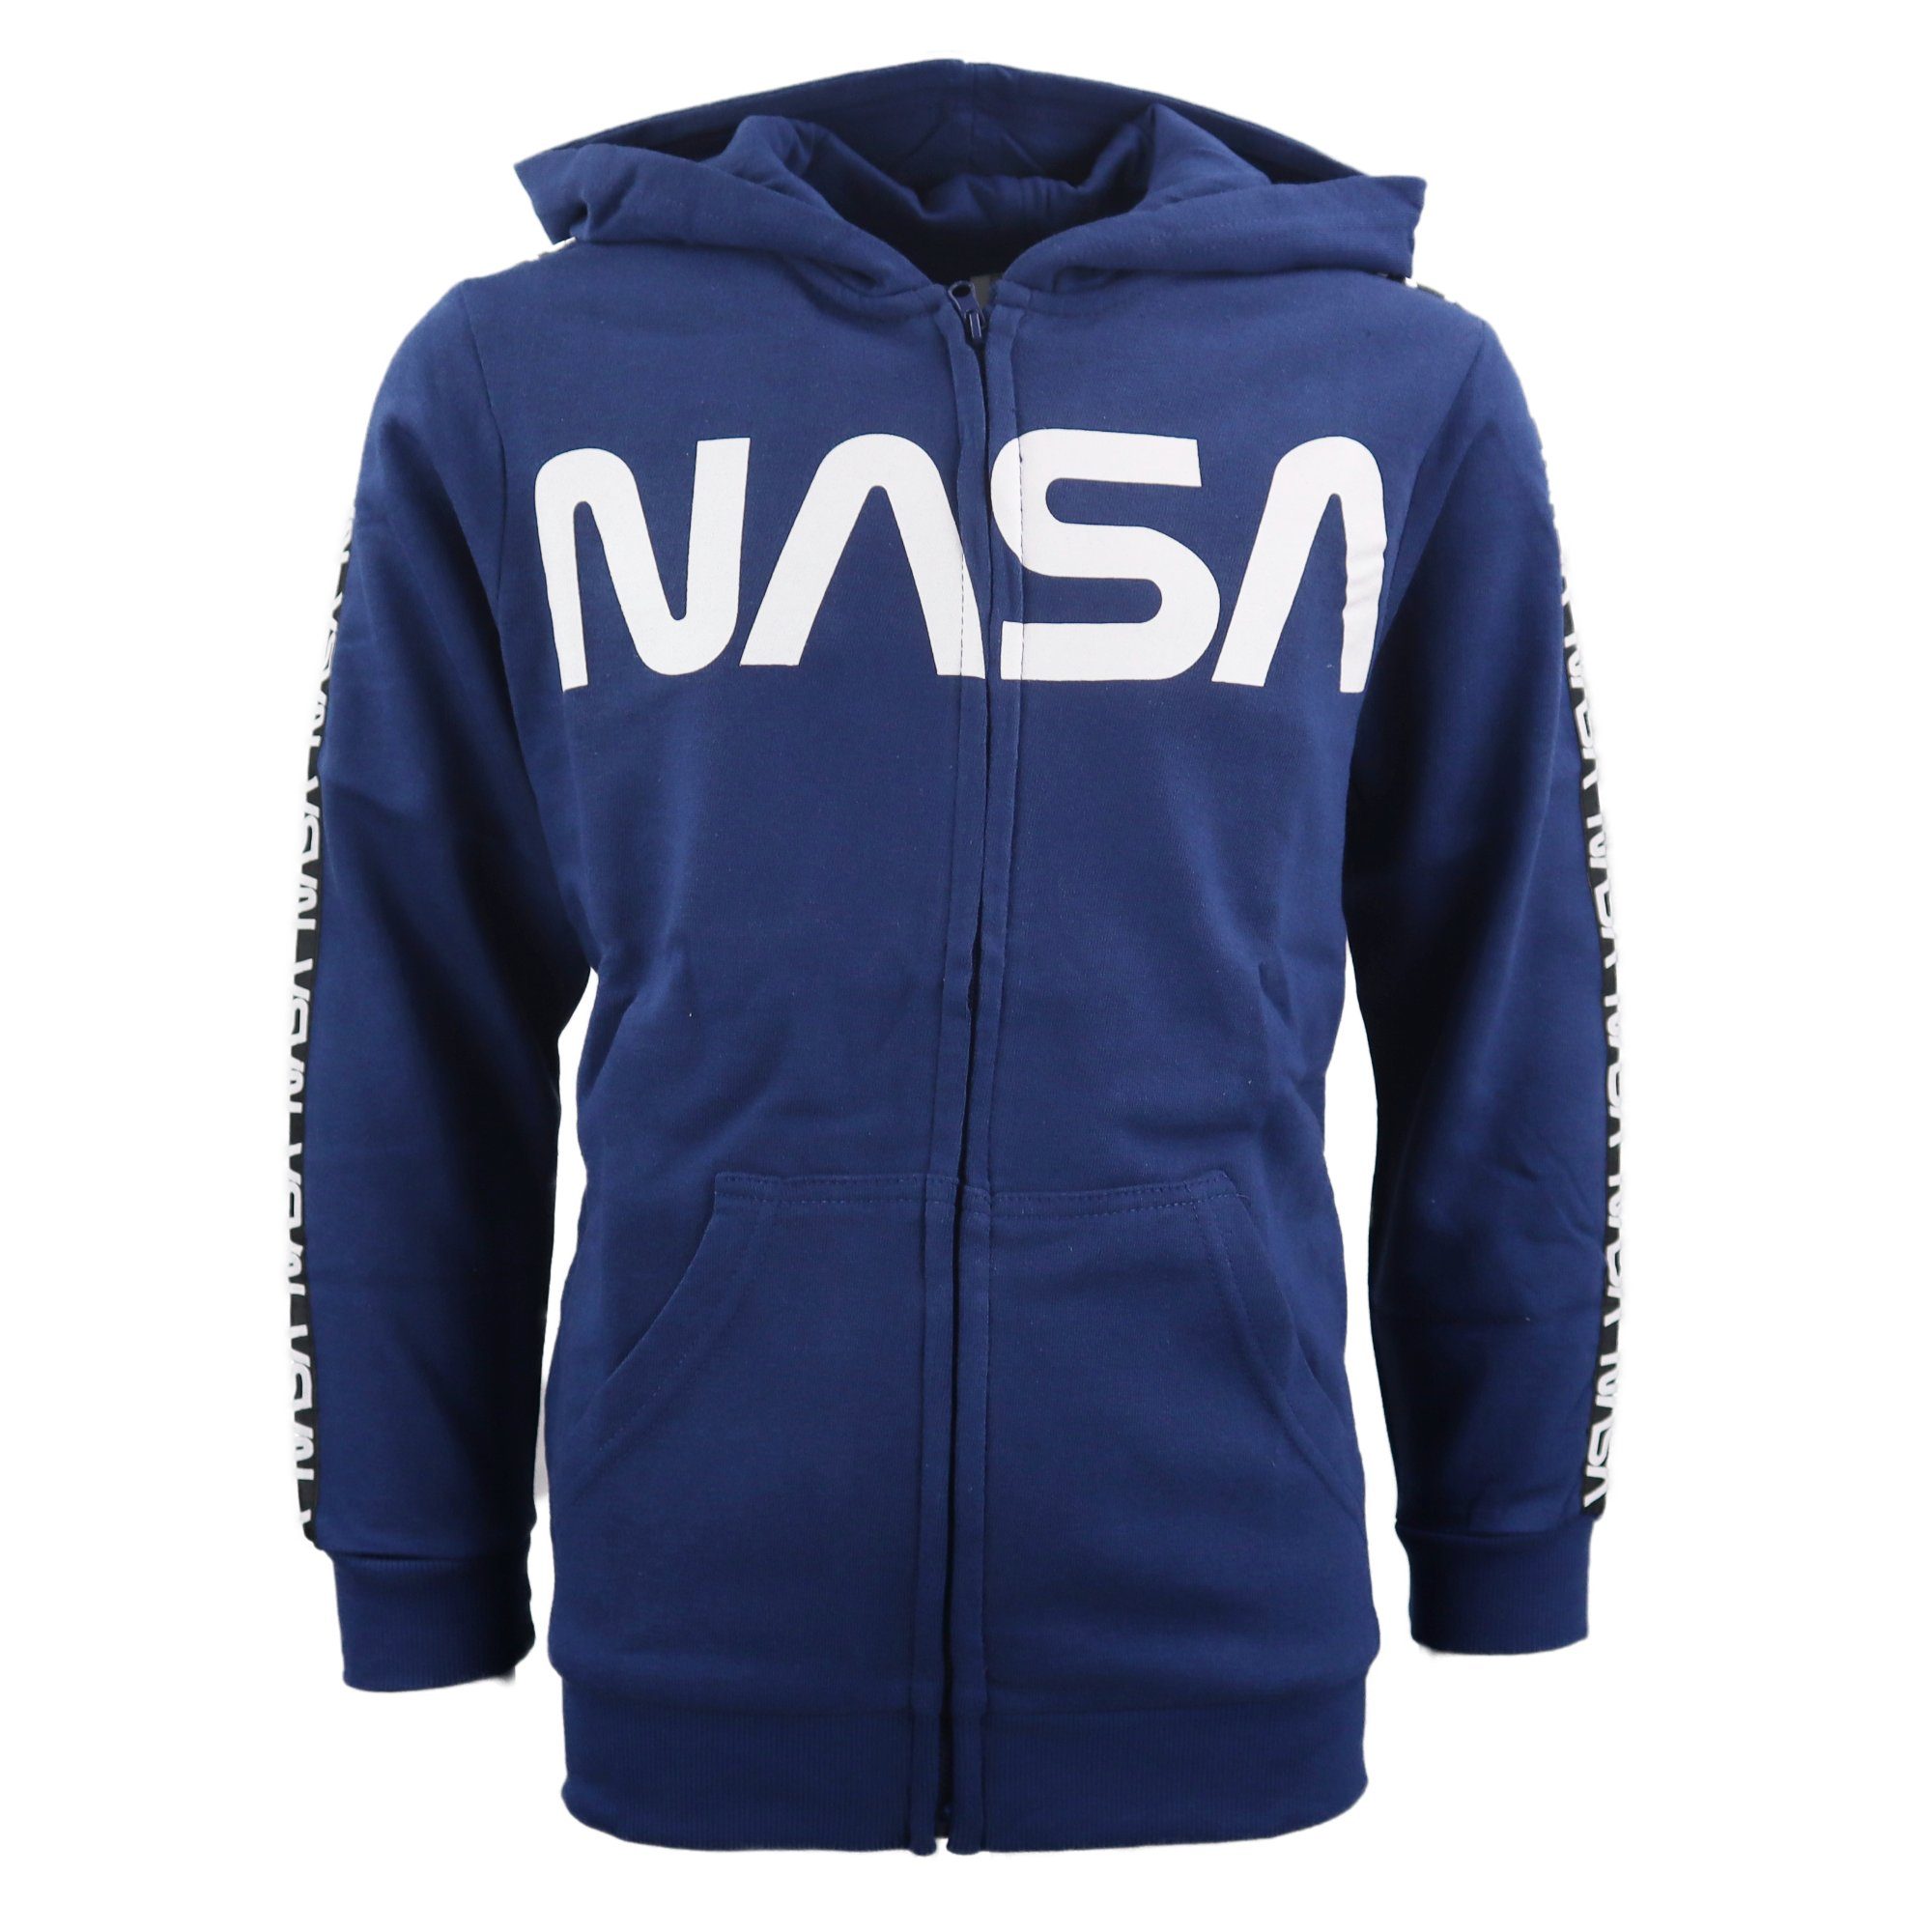 Hoodie Kapuzen NASA Baumwolle, 164, Gr. Kinder Jungen Pulli 134 Blau bis Jugend NASA 100%